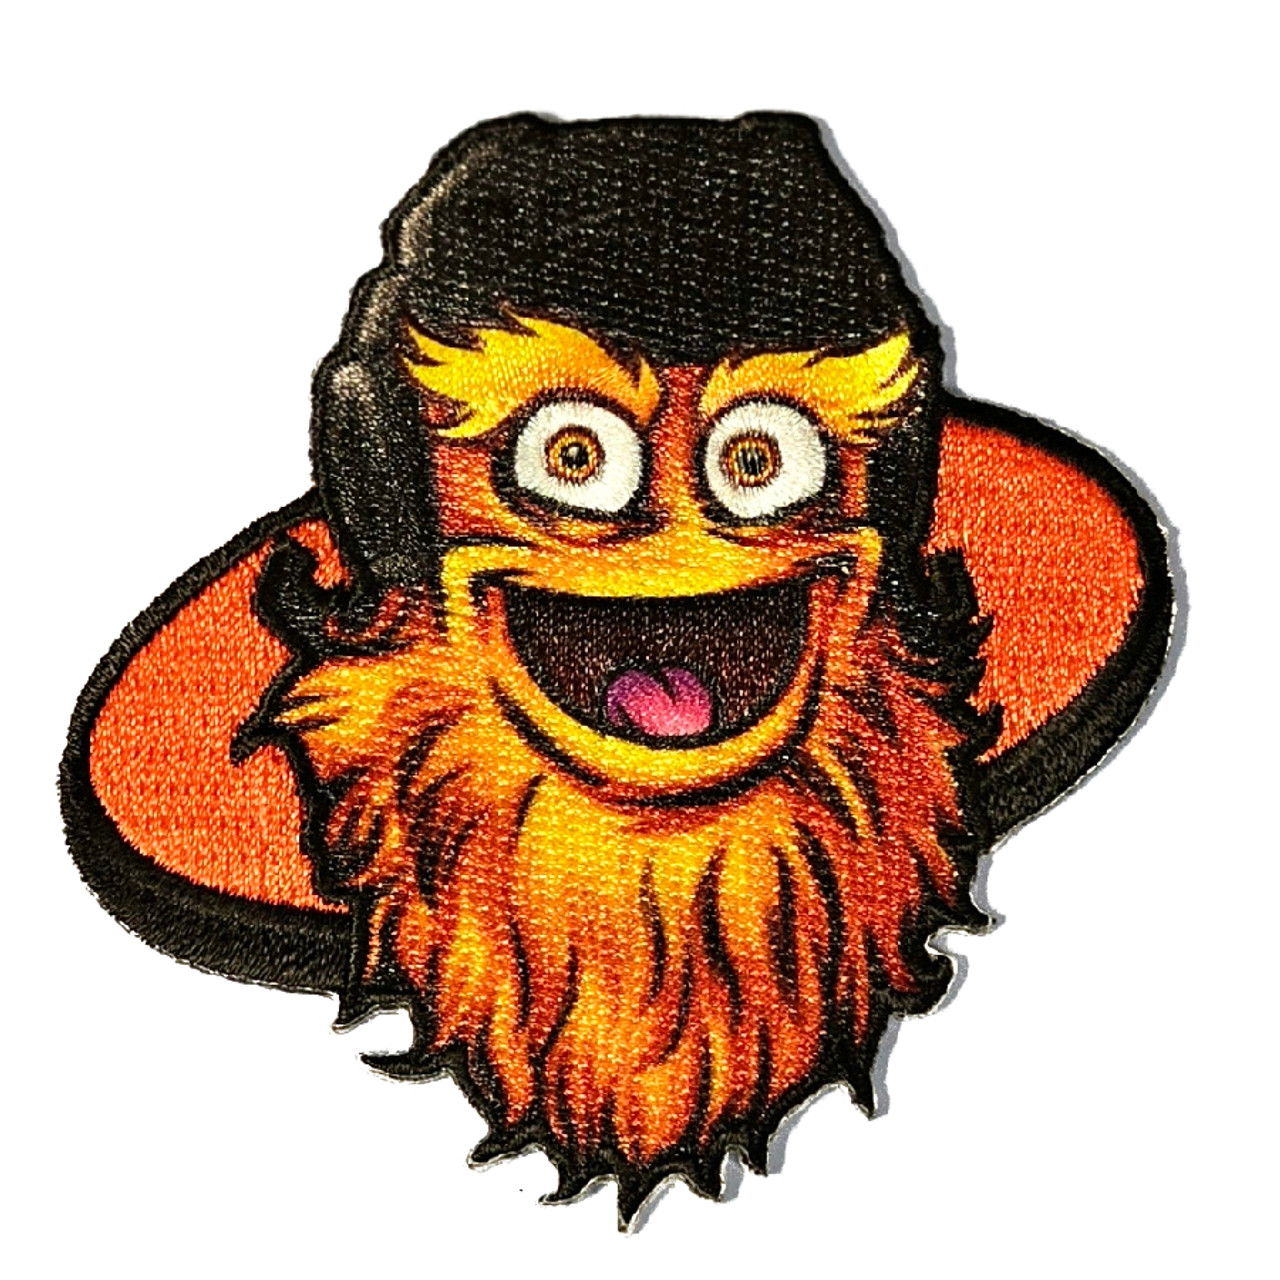 Philadelphia Flyers Gritty Black Jersey Plush Mascot